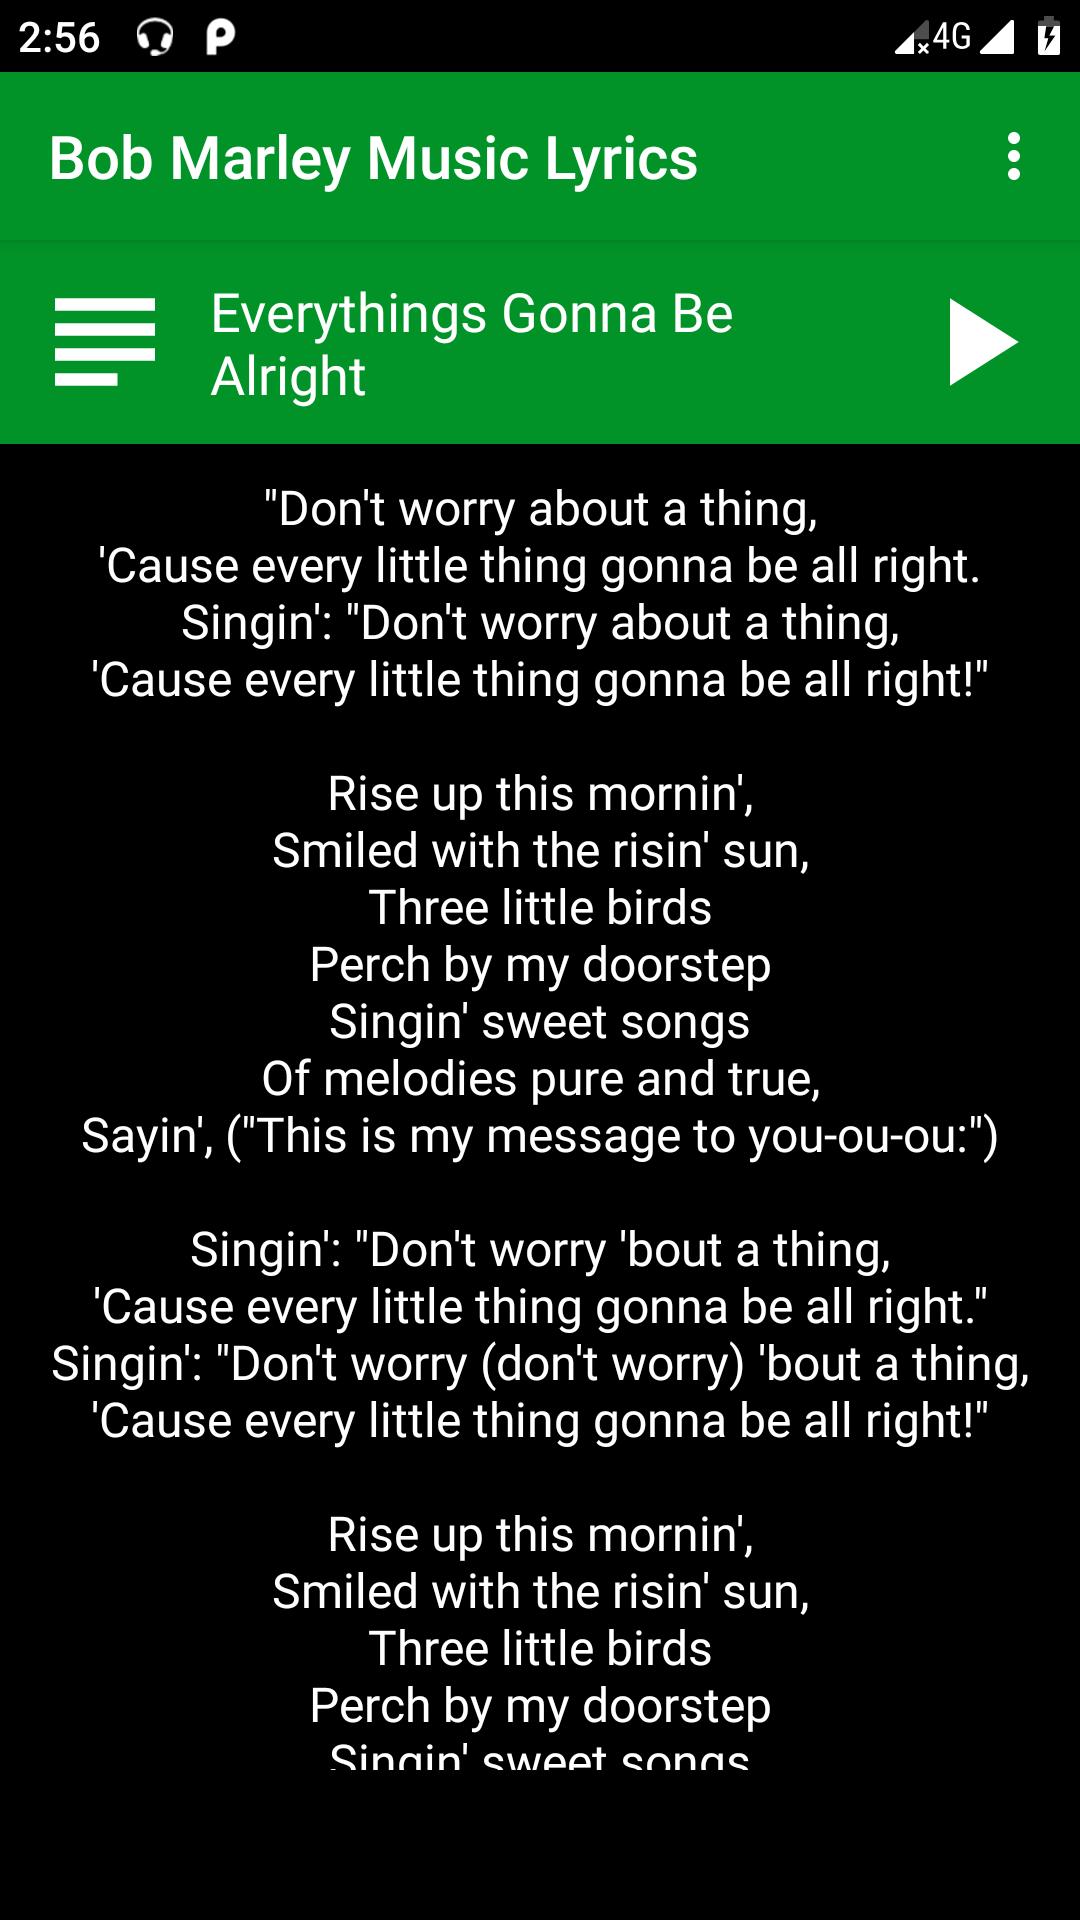 Bob Marley Music Lyrics For Android Apk Download